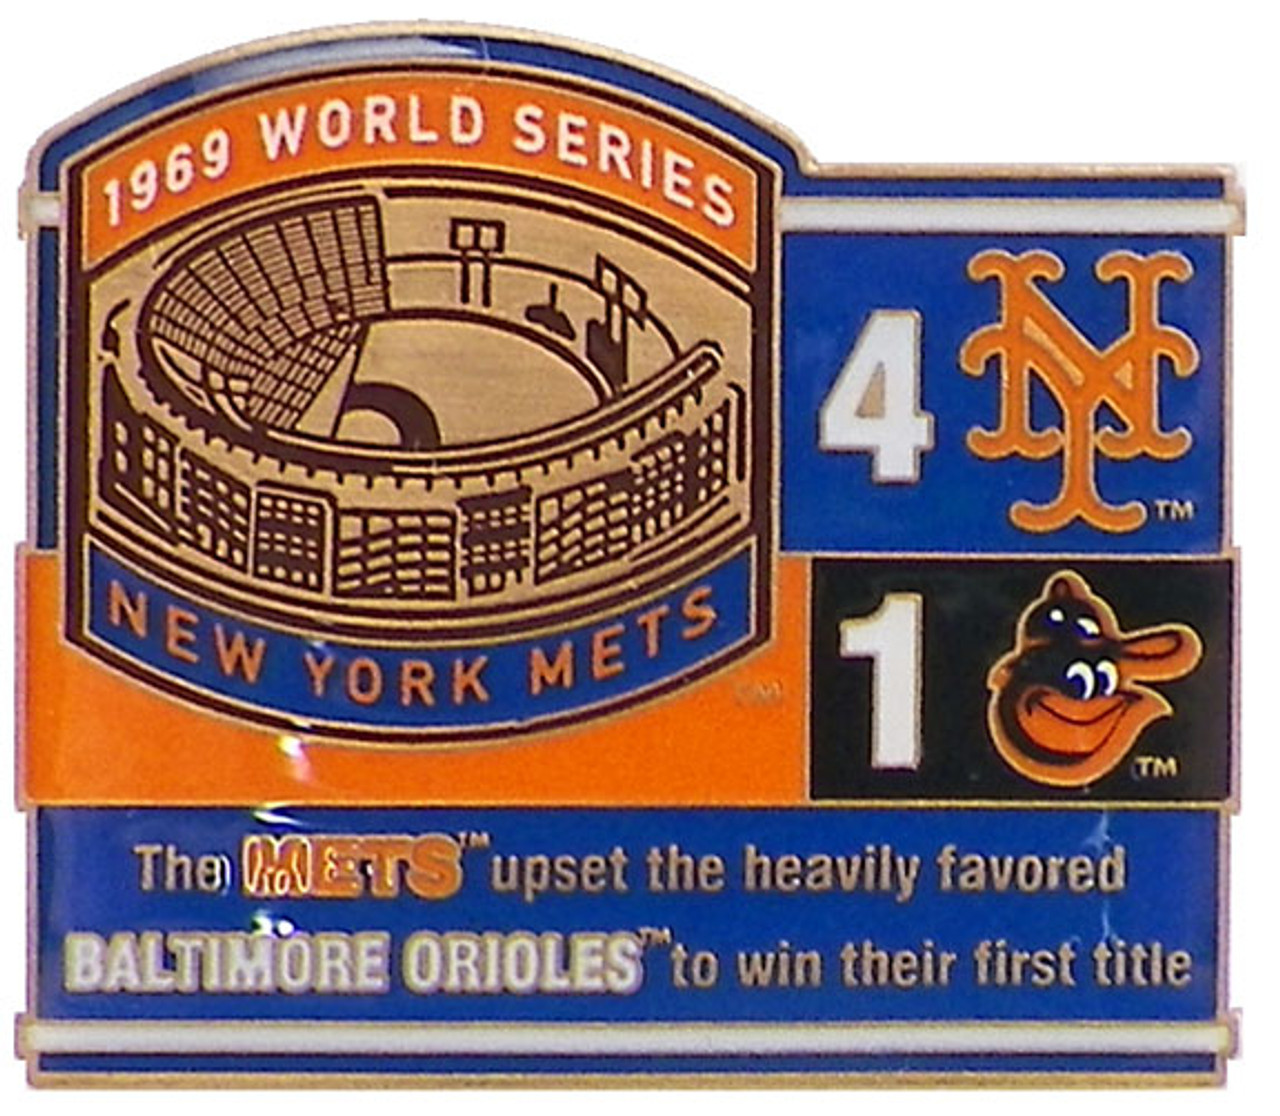 1969 World Series Commemorative Pin - Mets vs. Orioles